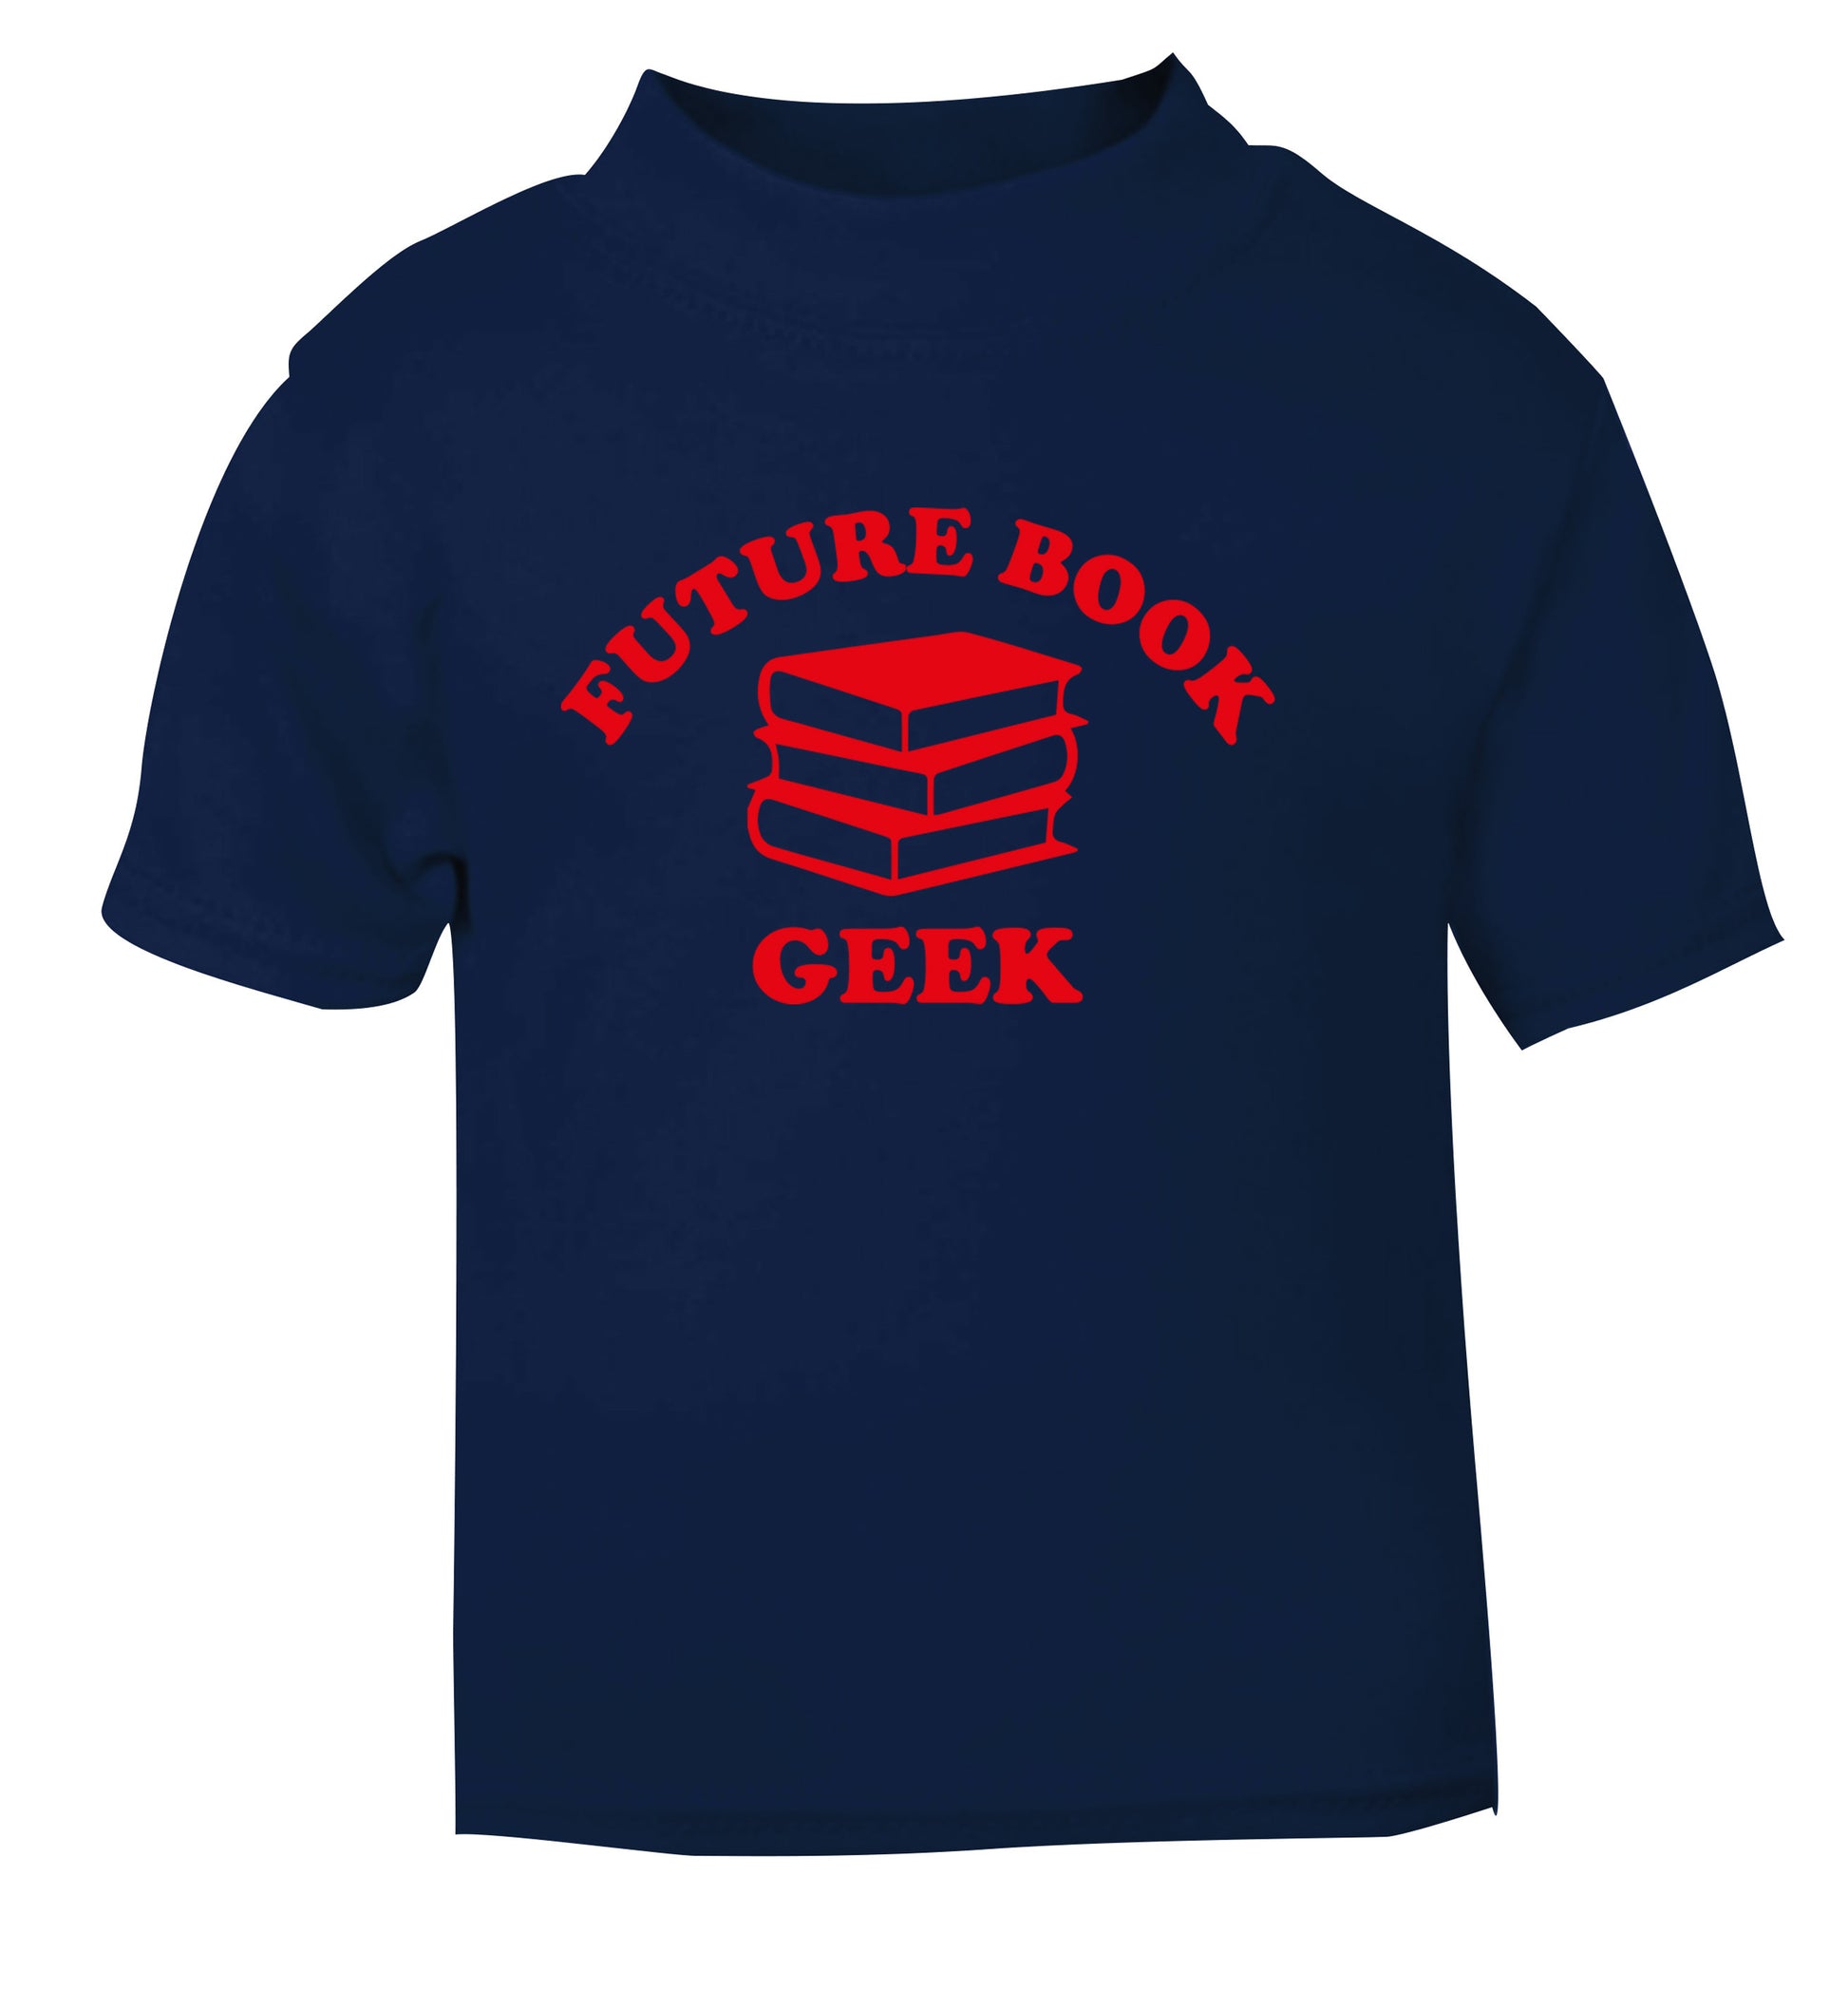 Future book geek navy Baby Toddler Tshirt 2 Years